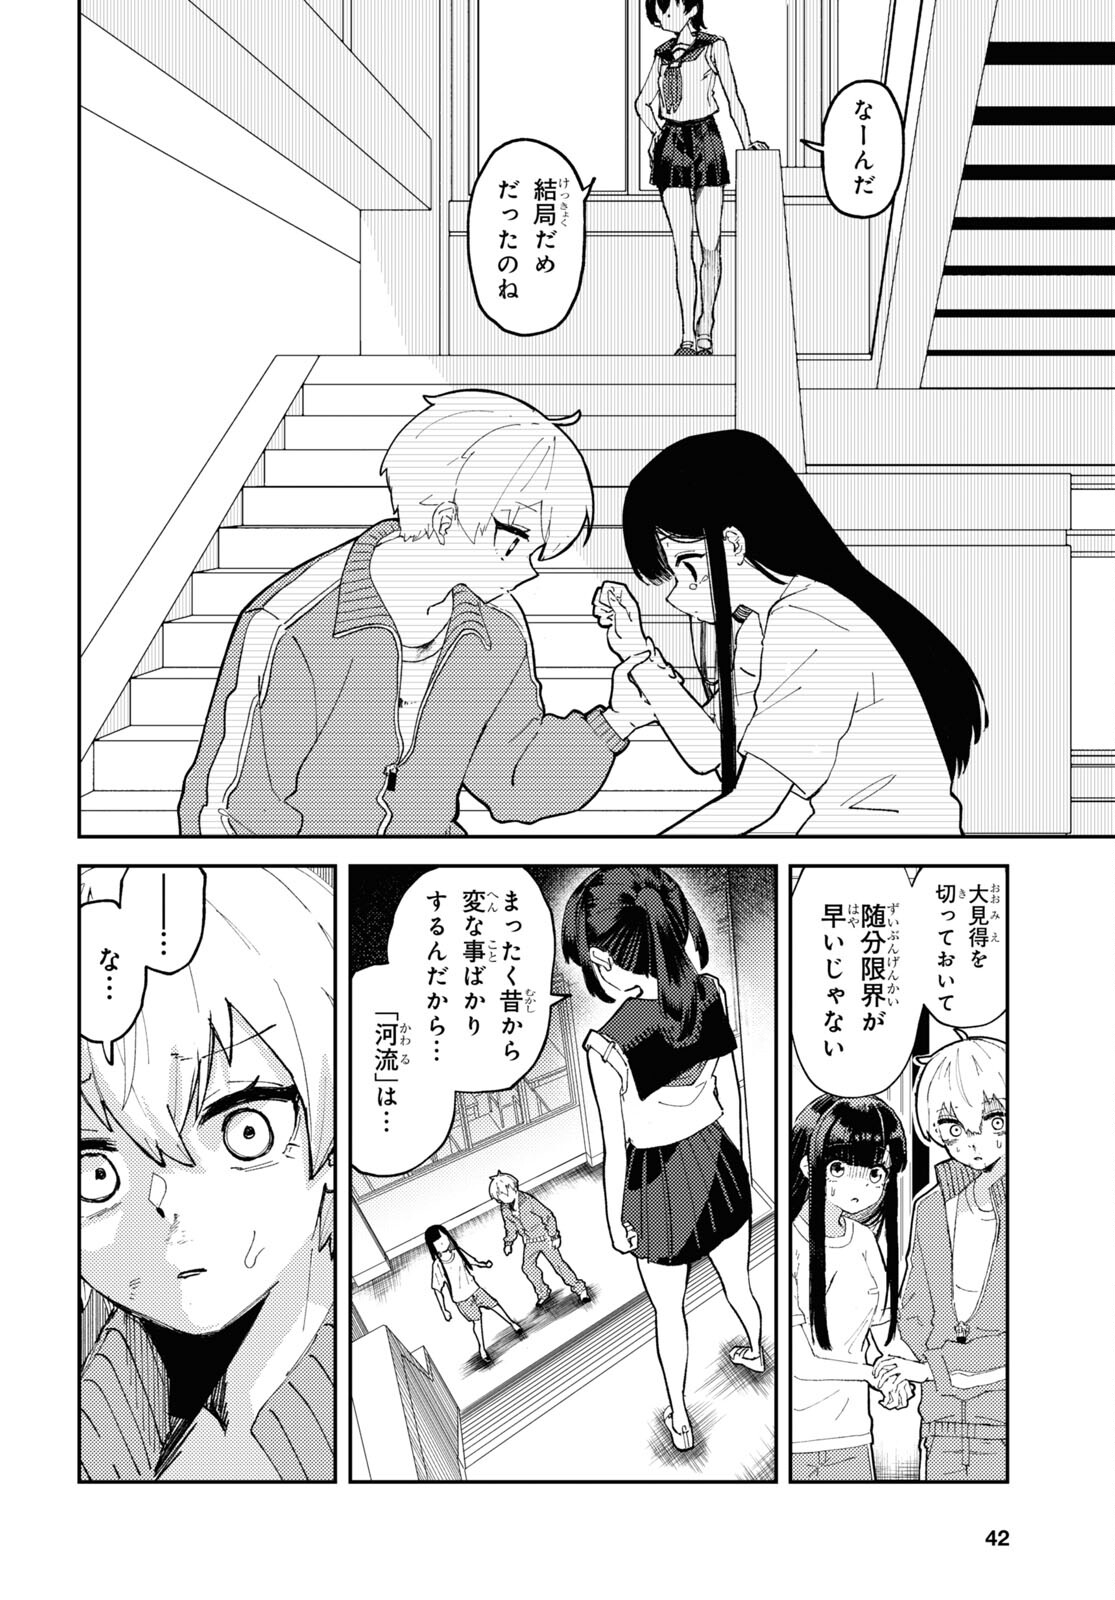 Garuru Girl - Chapter 1 - Page 27